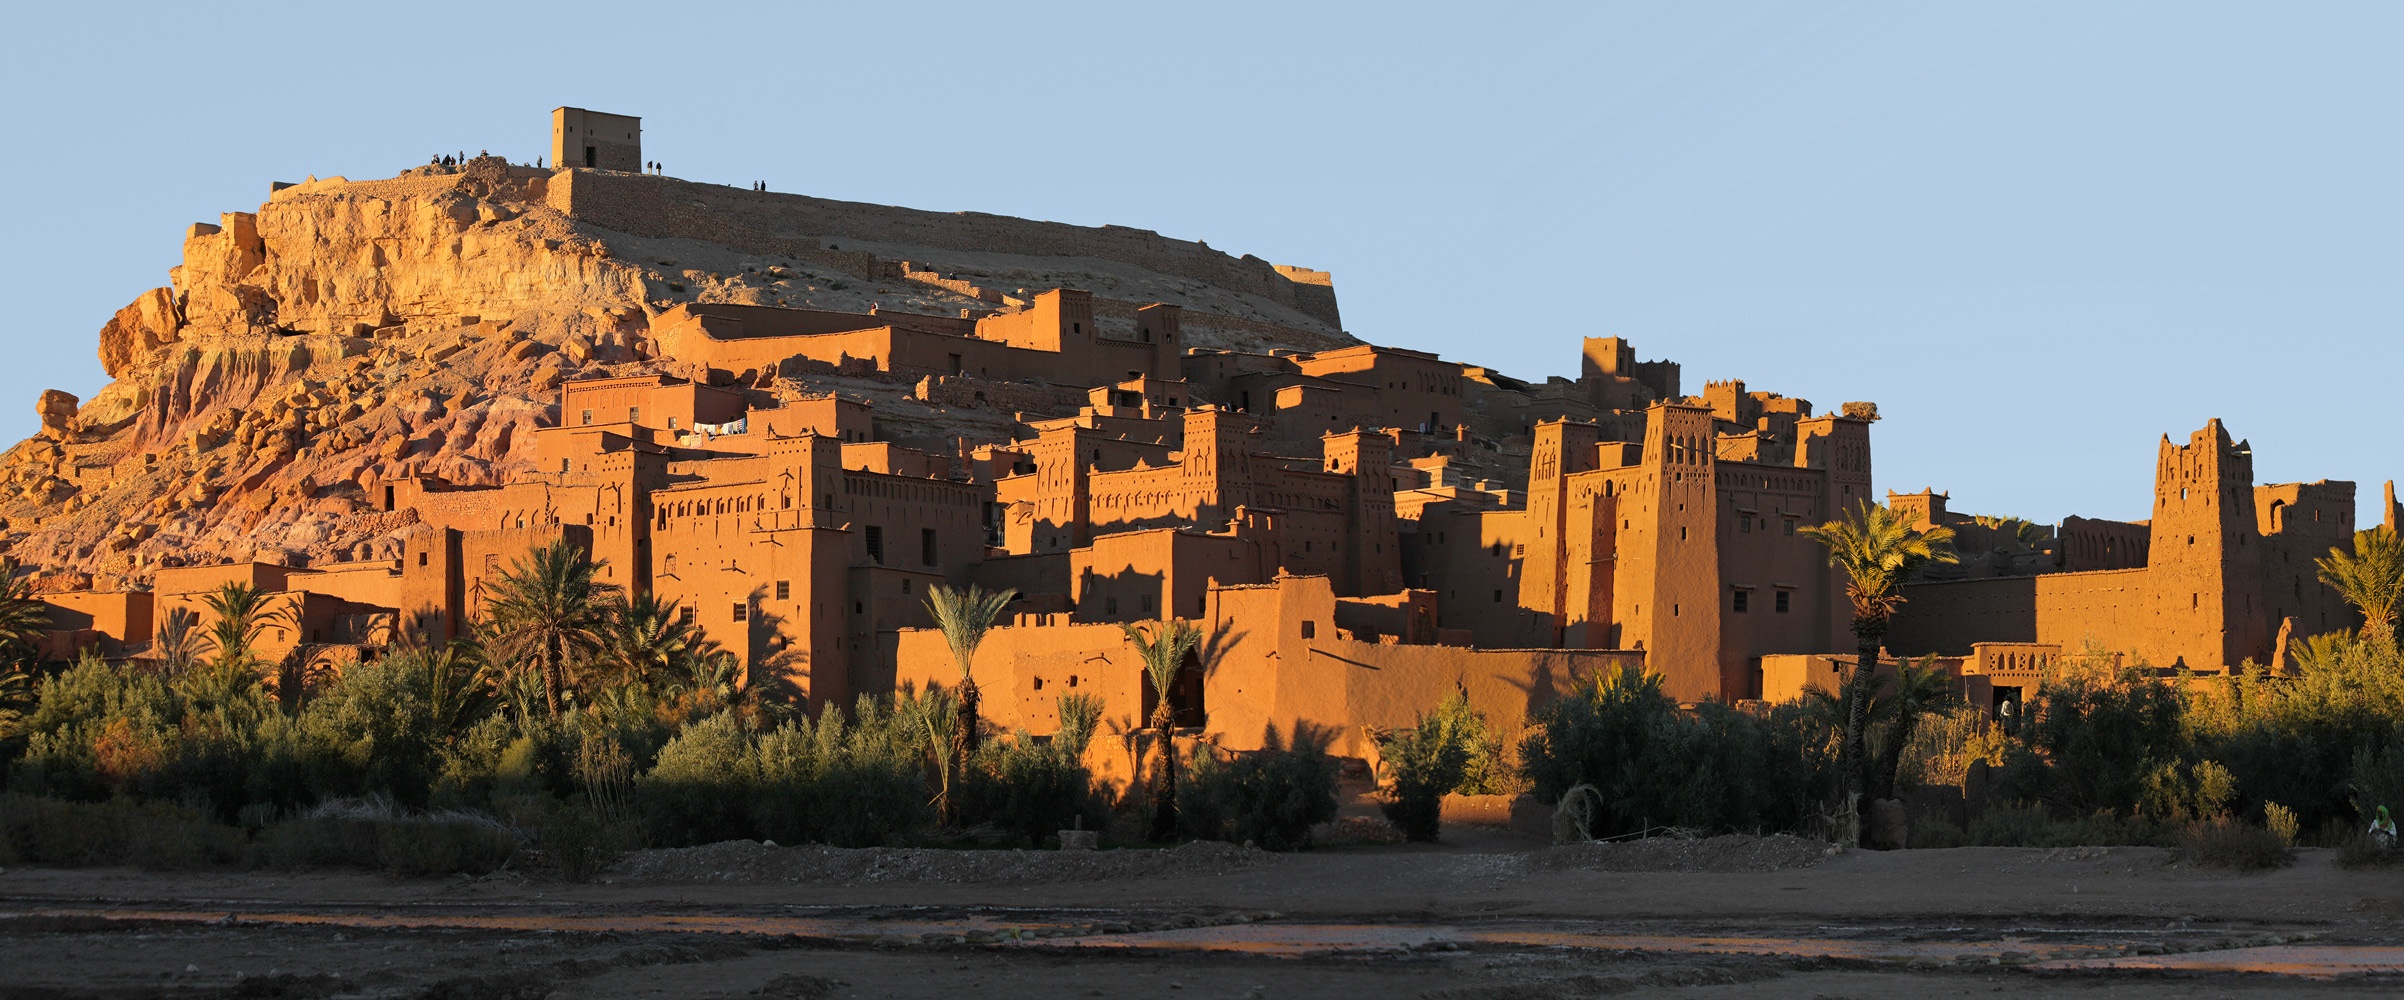 bill-hocker-kasbah-ait-ben-haddou-near-ouarzazate-morocco-2012